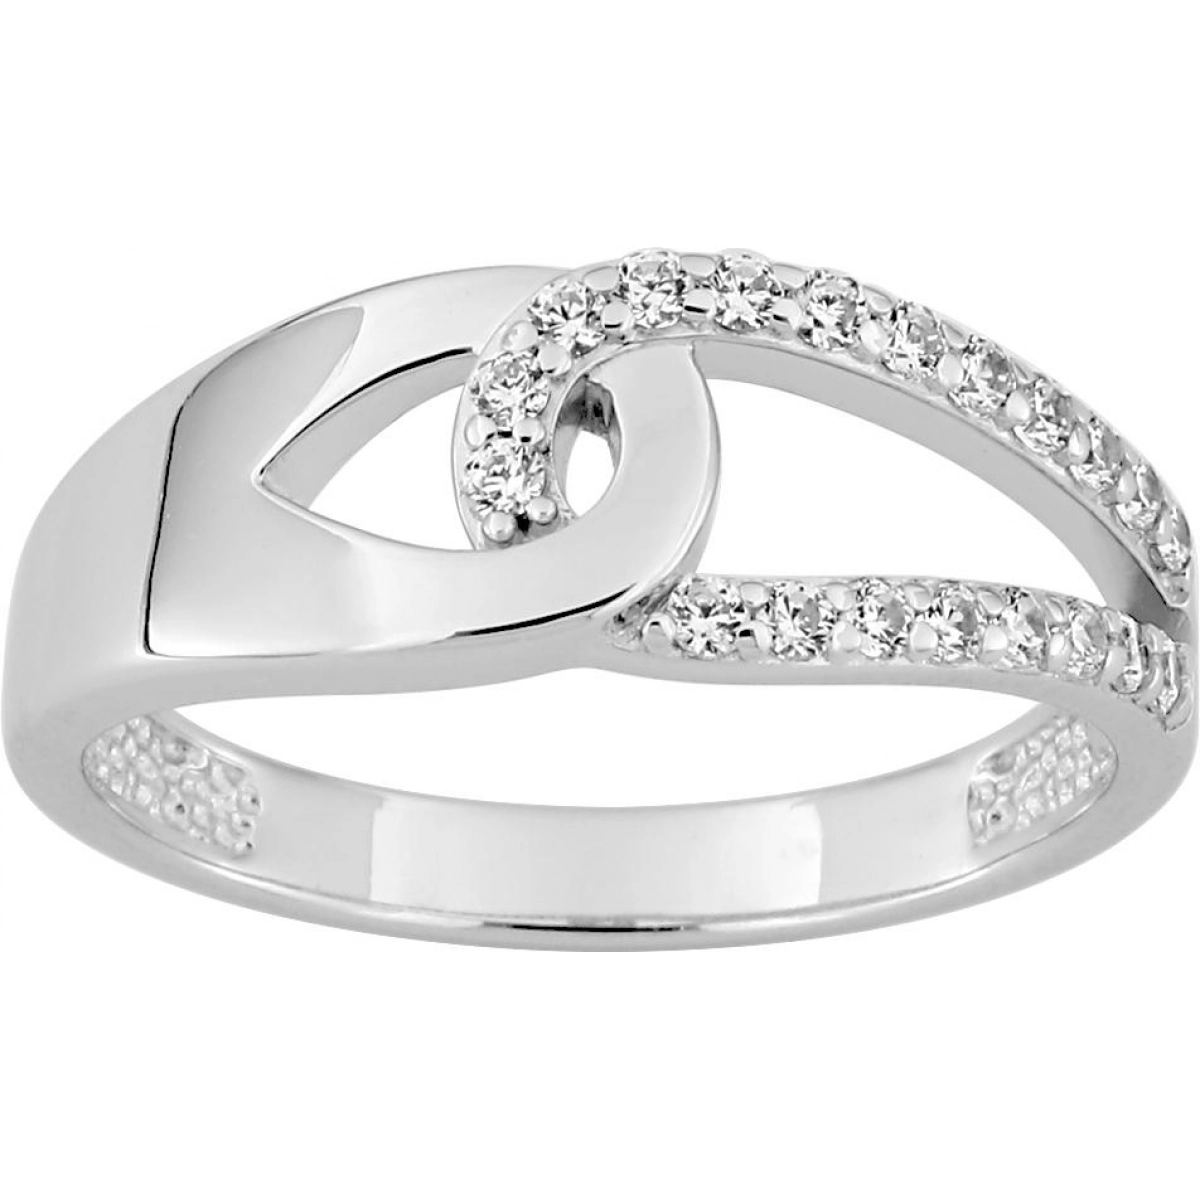 Ring w. cz rh925 Silver Lua Blanca  450450.9 - Size 62